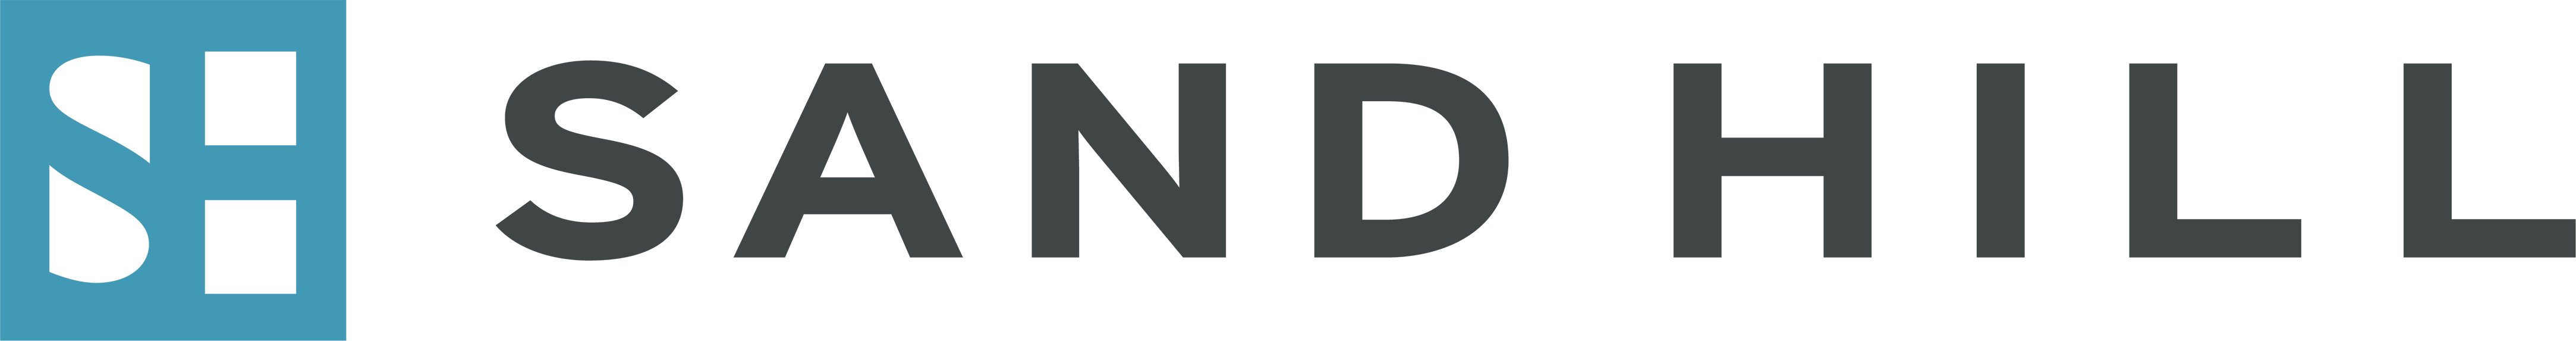 Sand Hill logo